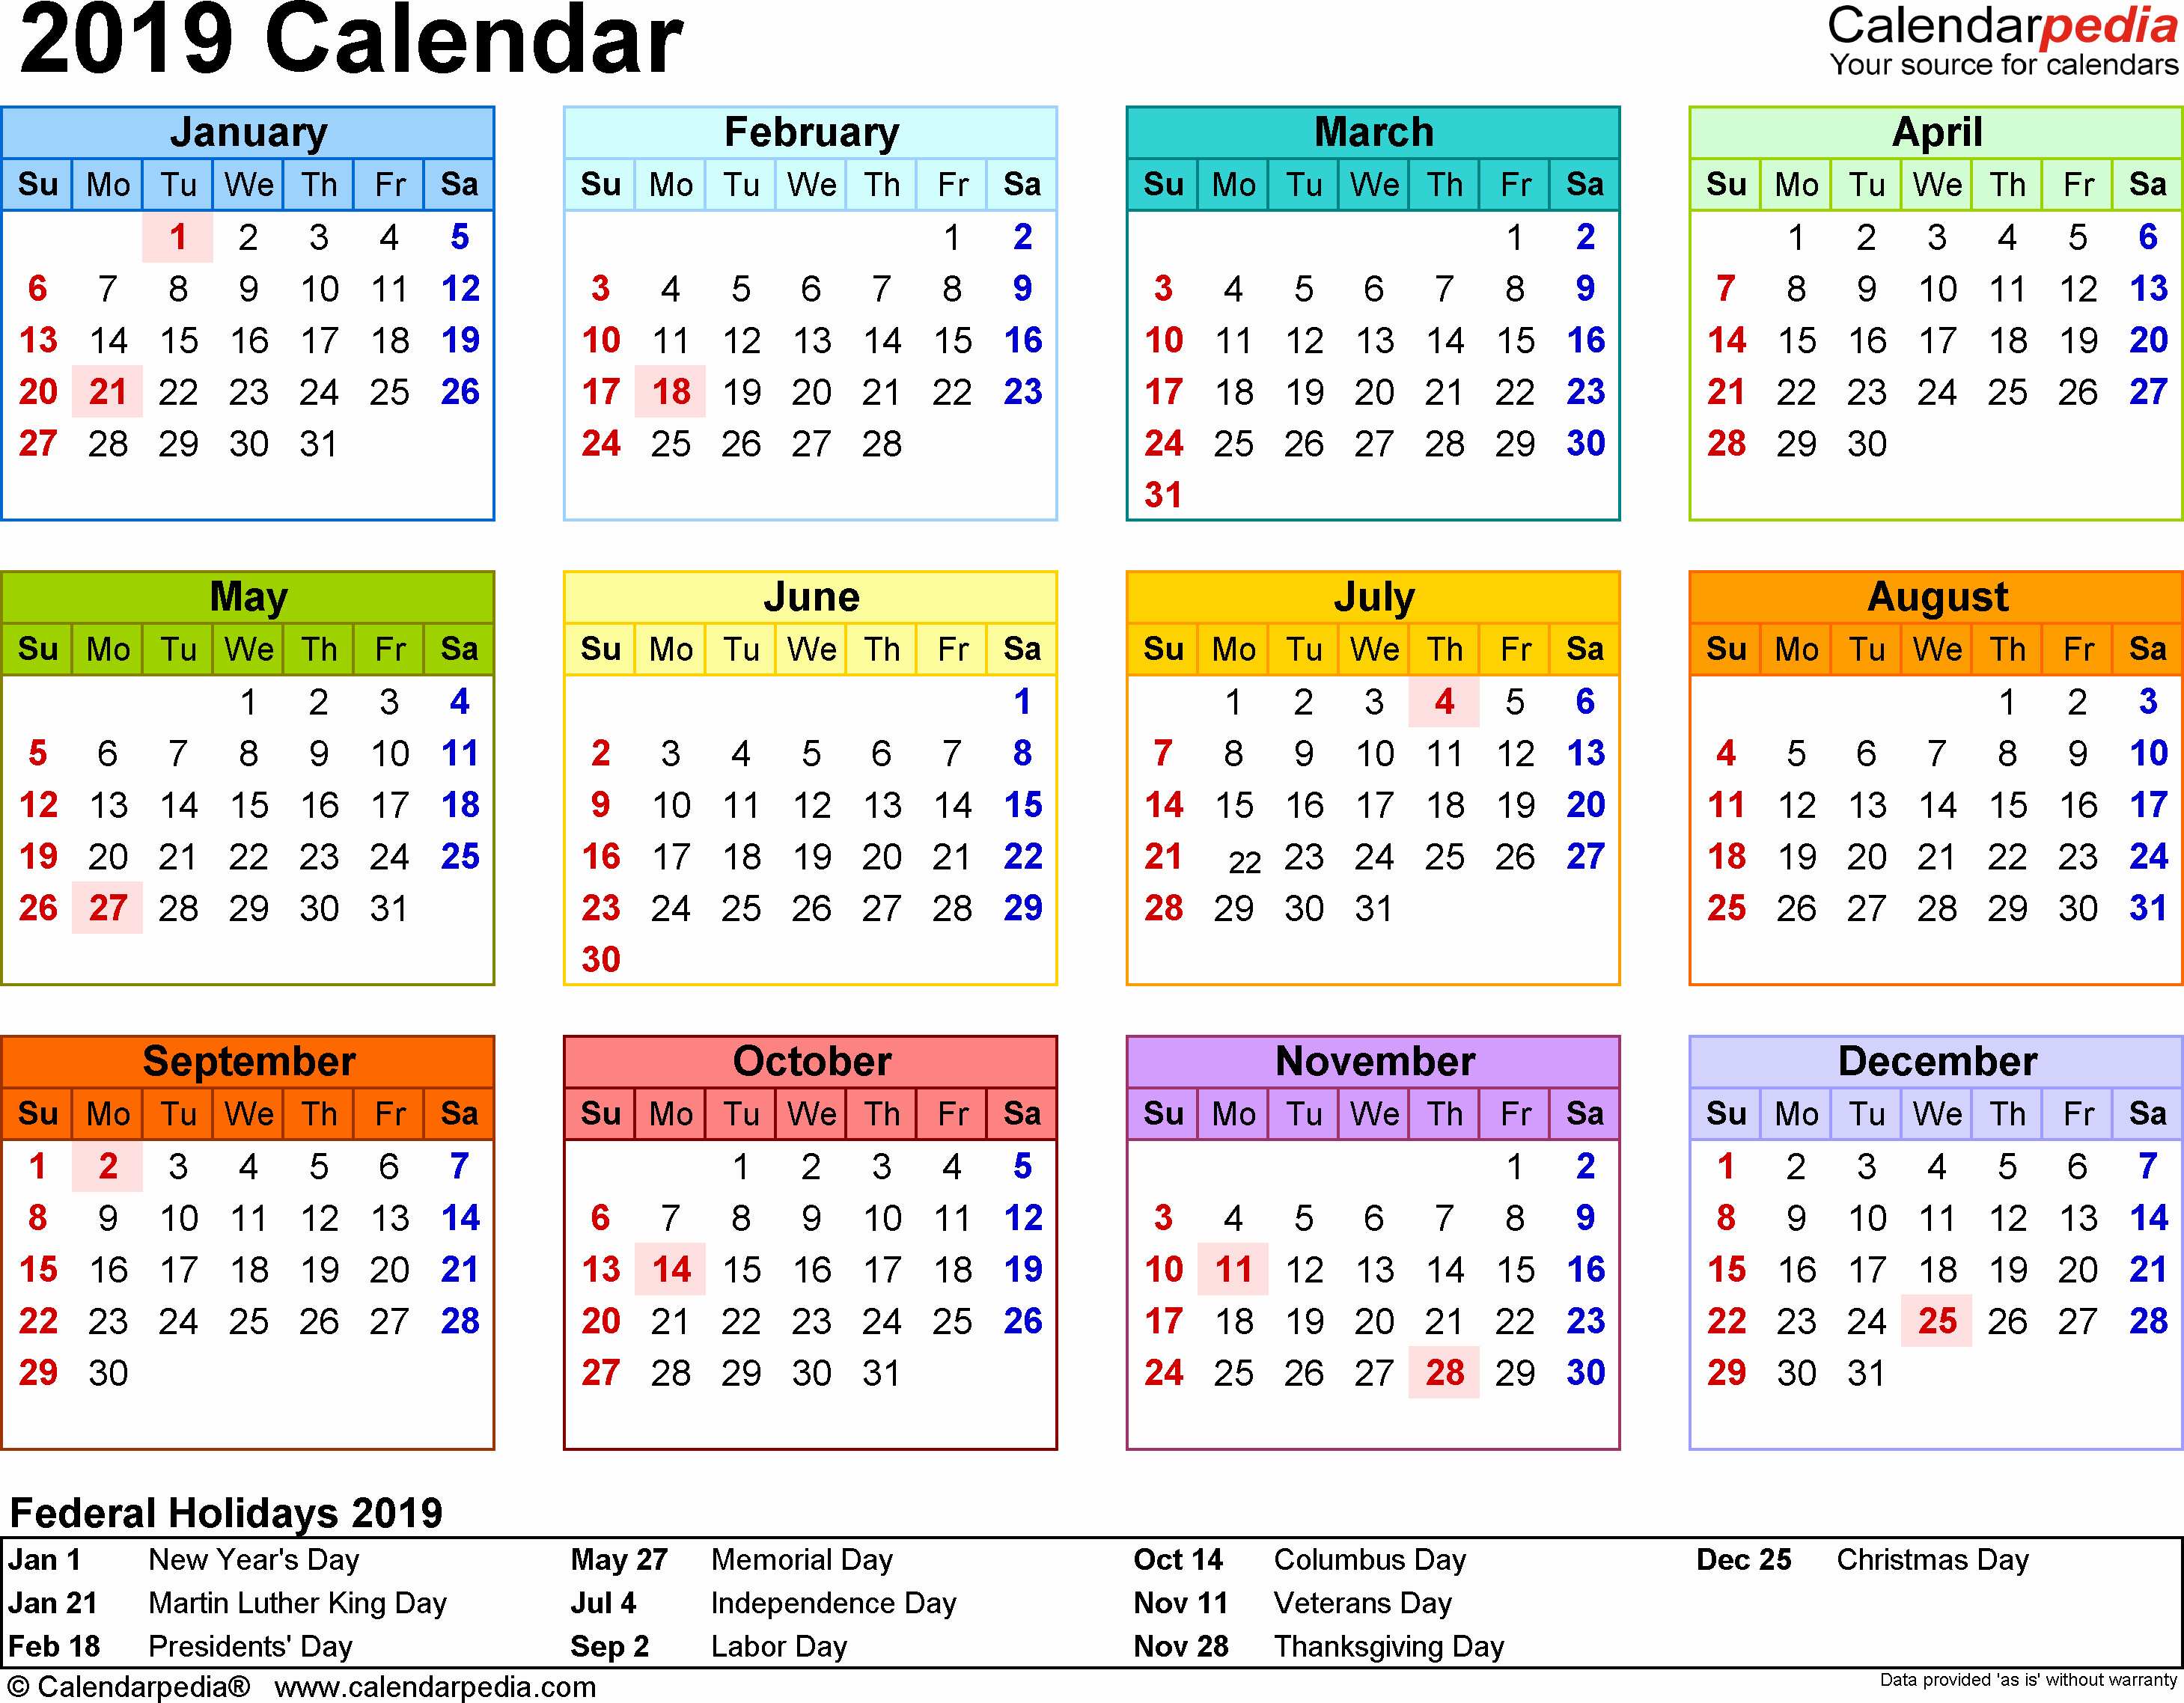 Excel Calendar 2019 Template New 2019 Calendar Download 17 Free Printable Excel Templates